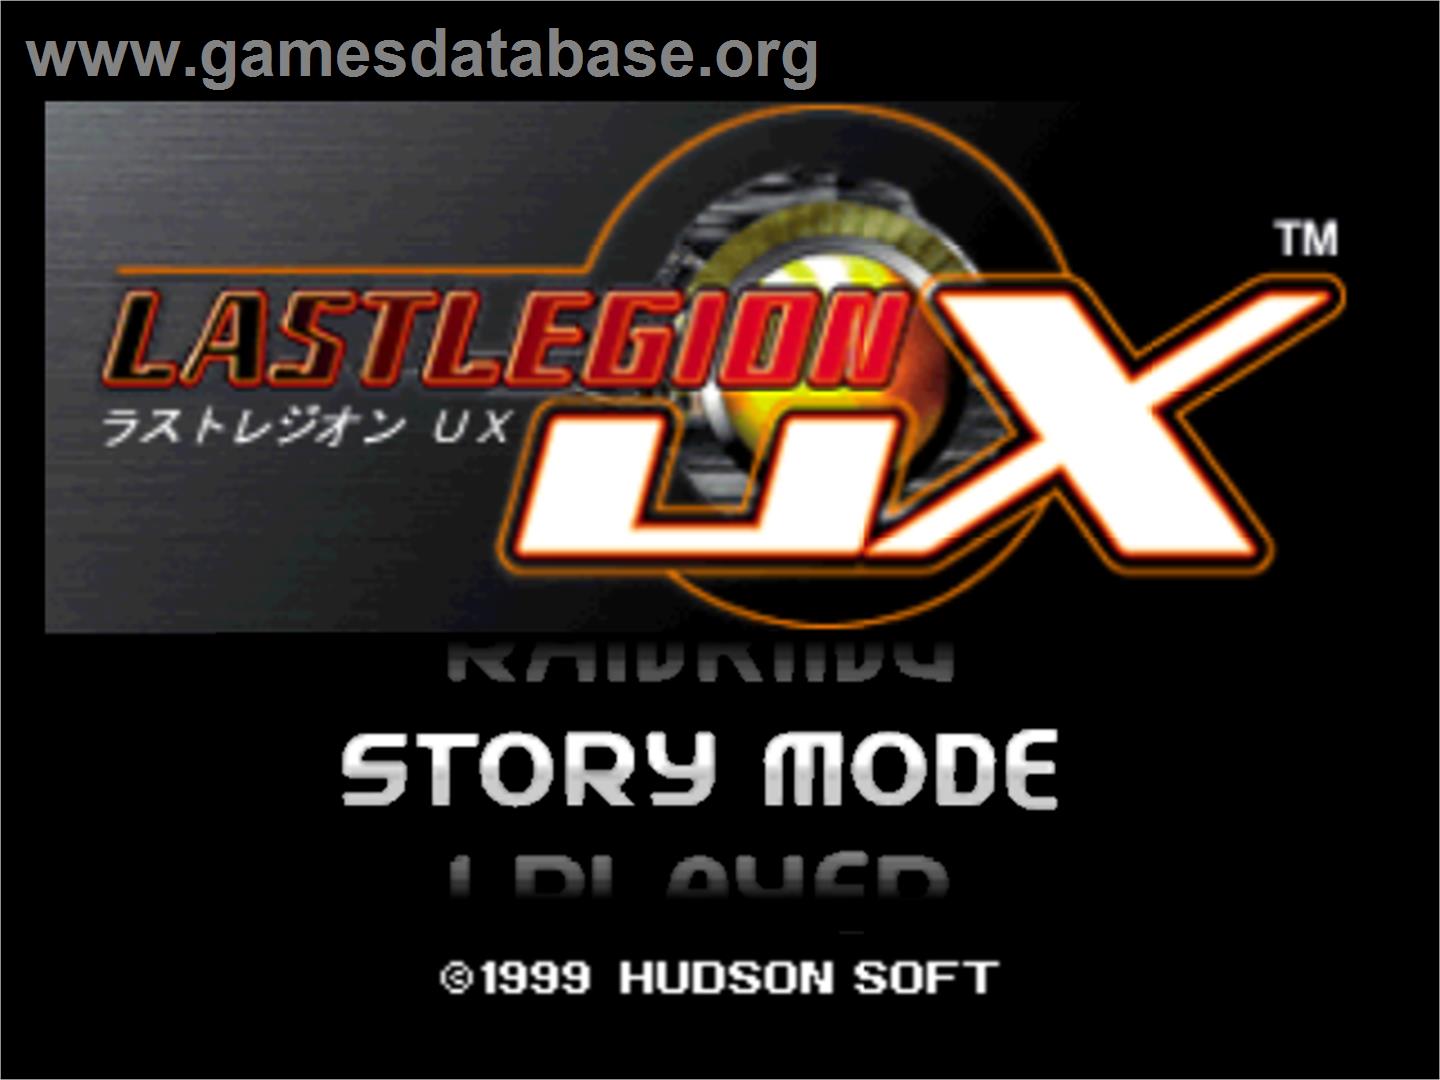 Last Legion UX - Nintendo N64 - Artwork - Title Screen